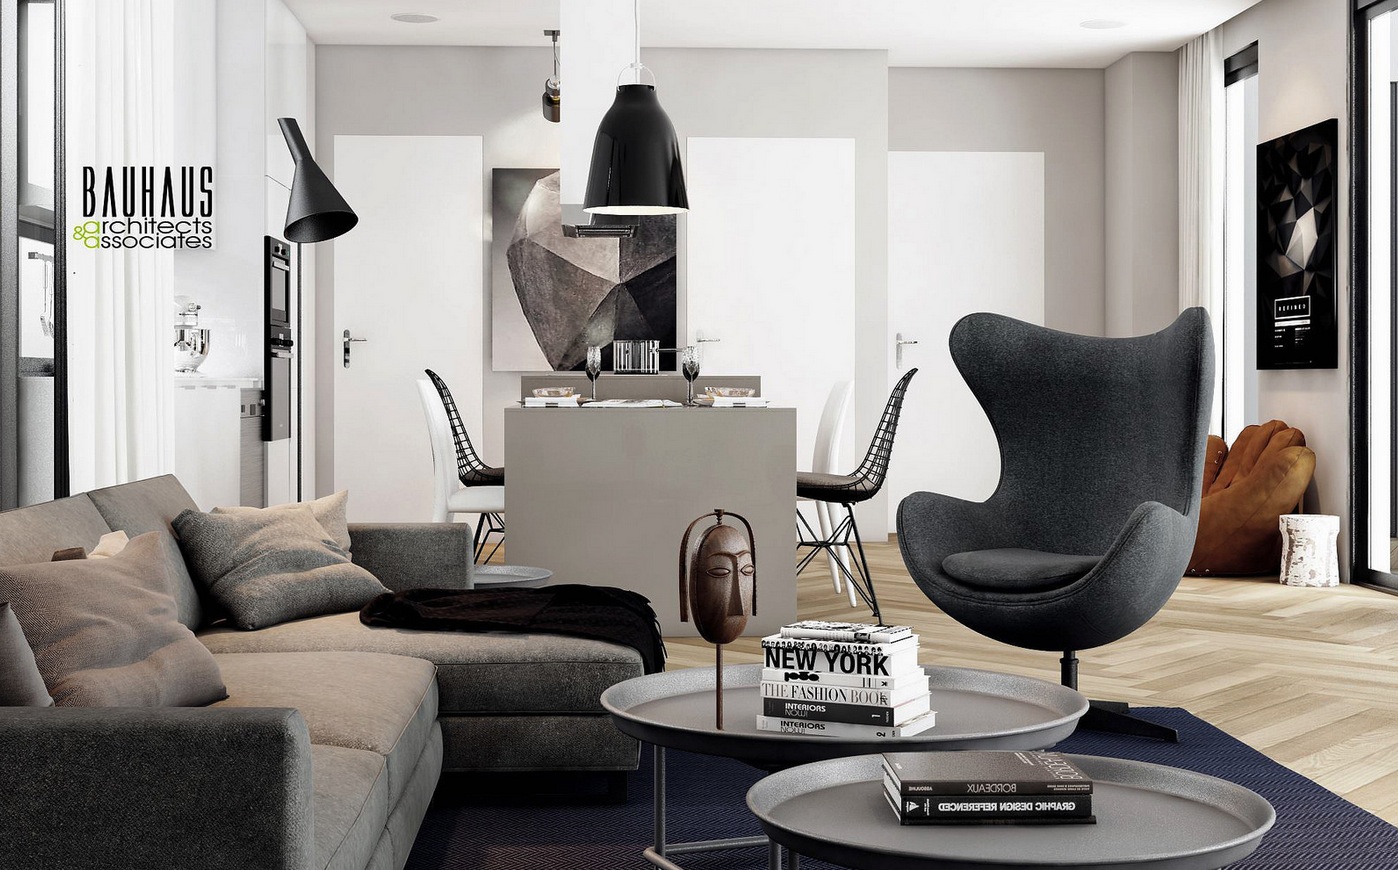 Inspirational Interior Ideas From Bauhaus Architects ...
